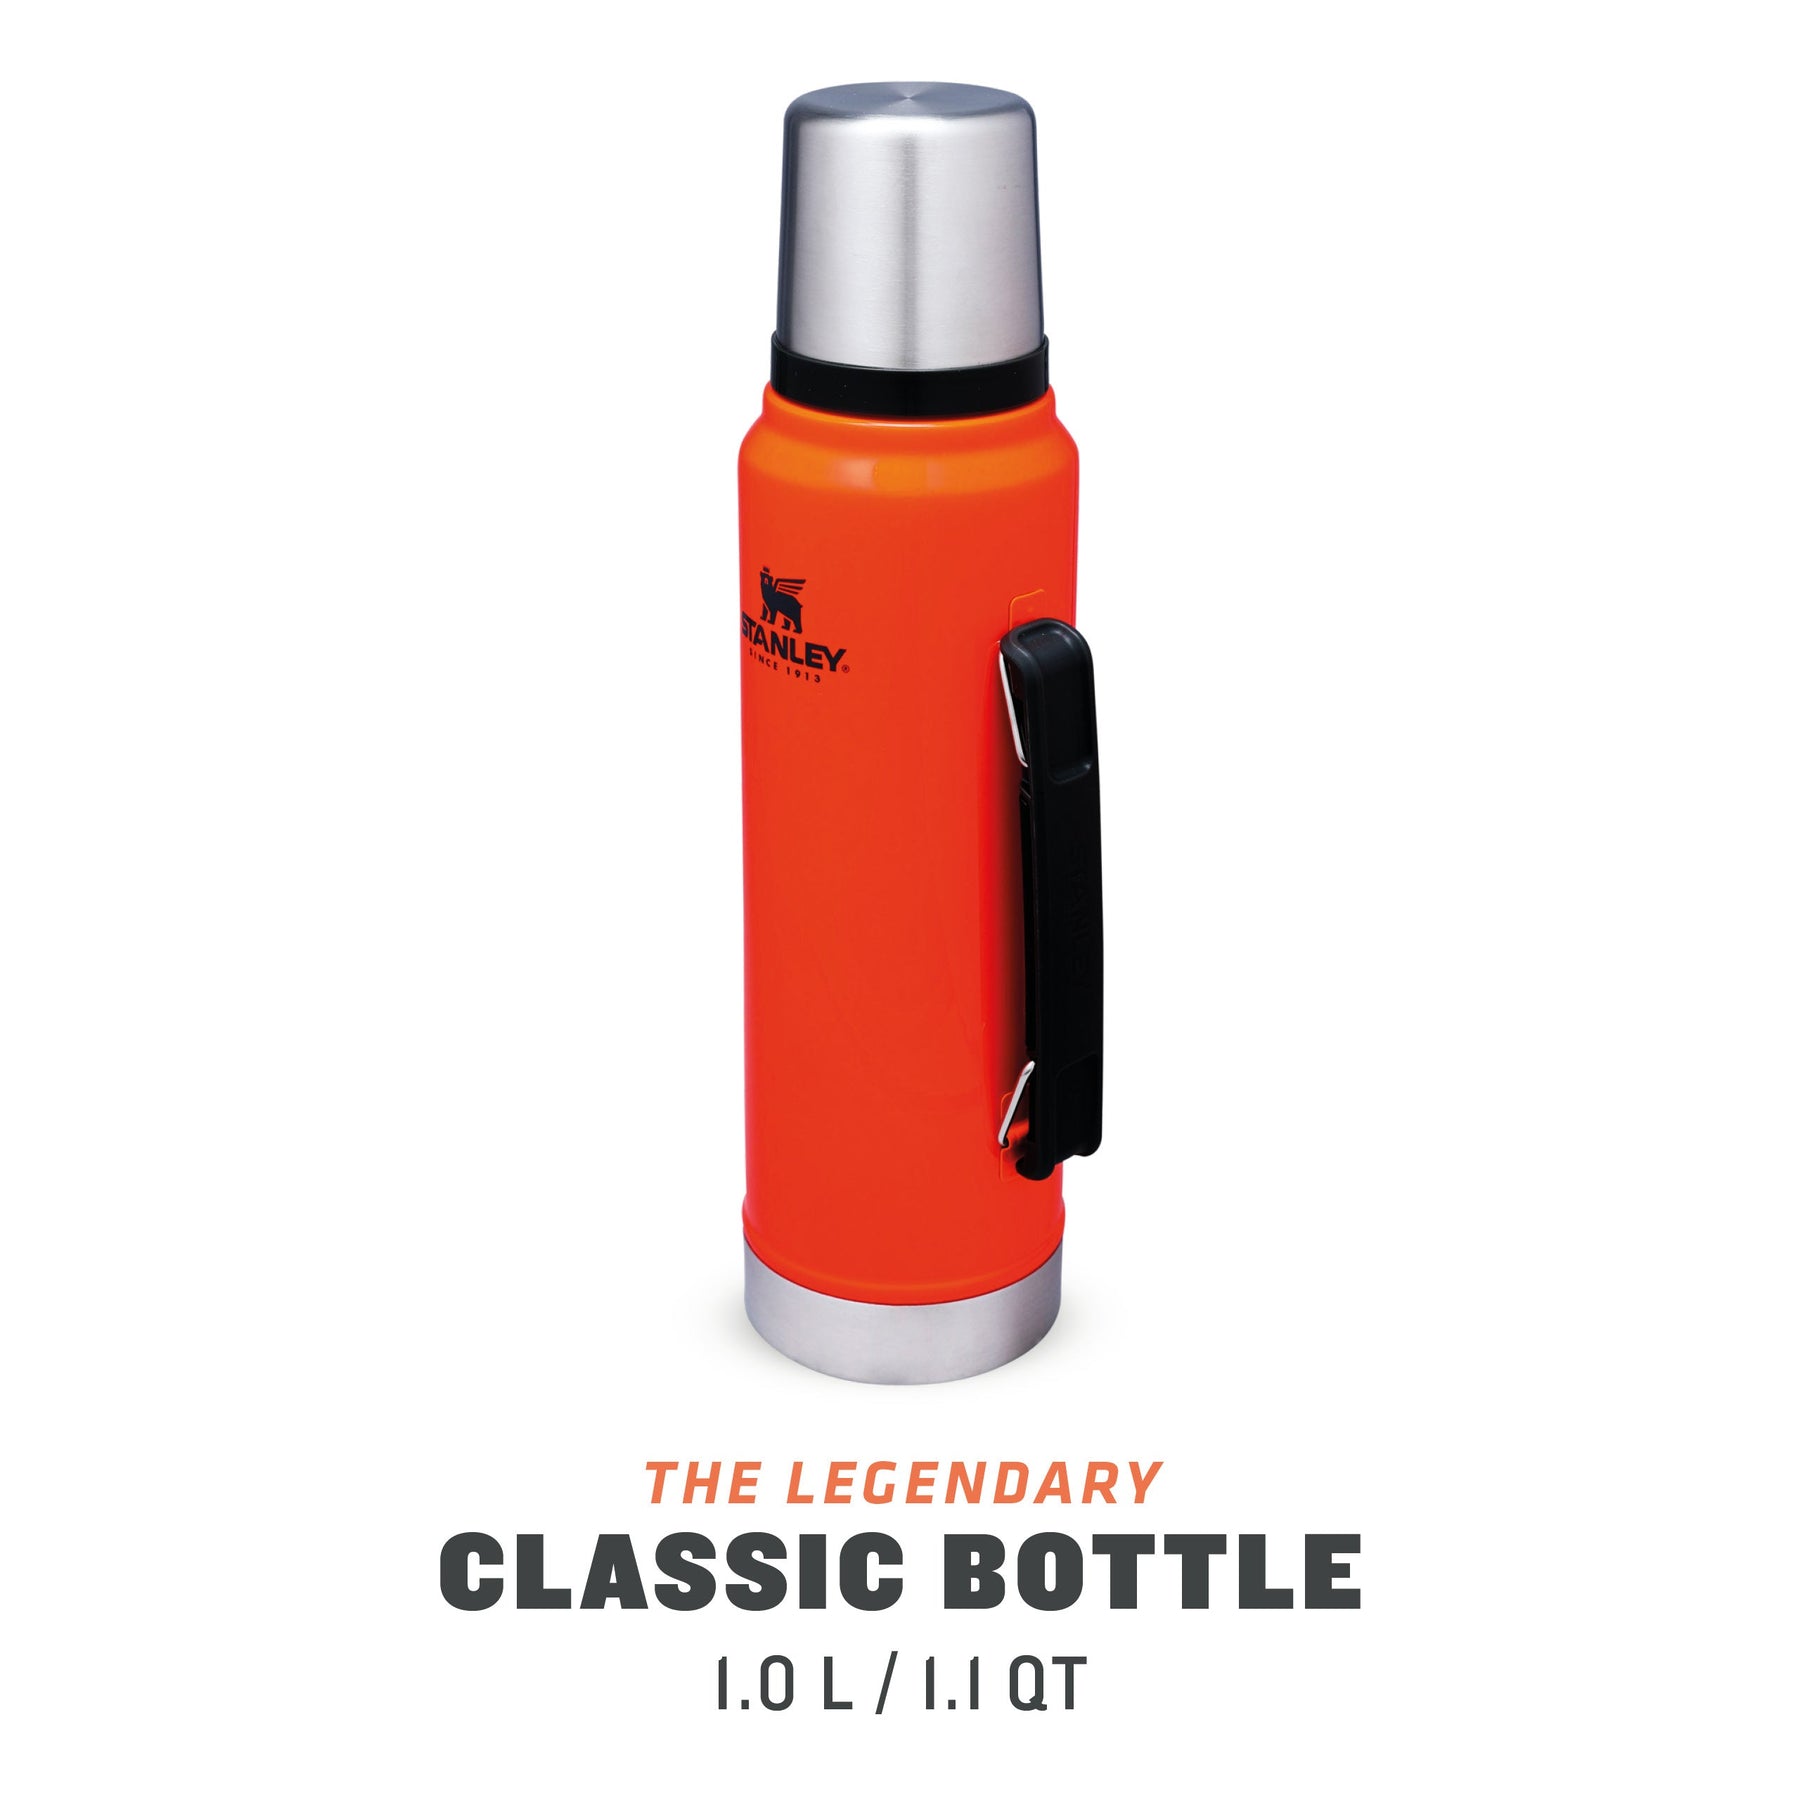 Stanley Classic Legendary Bottle 1.0L